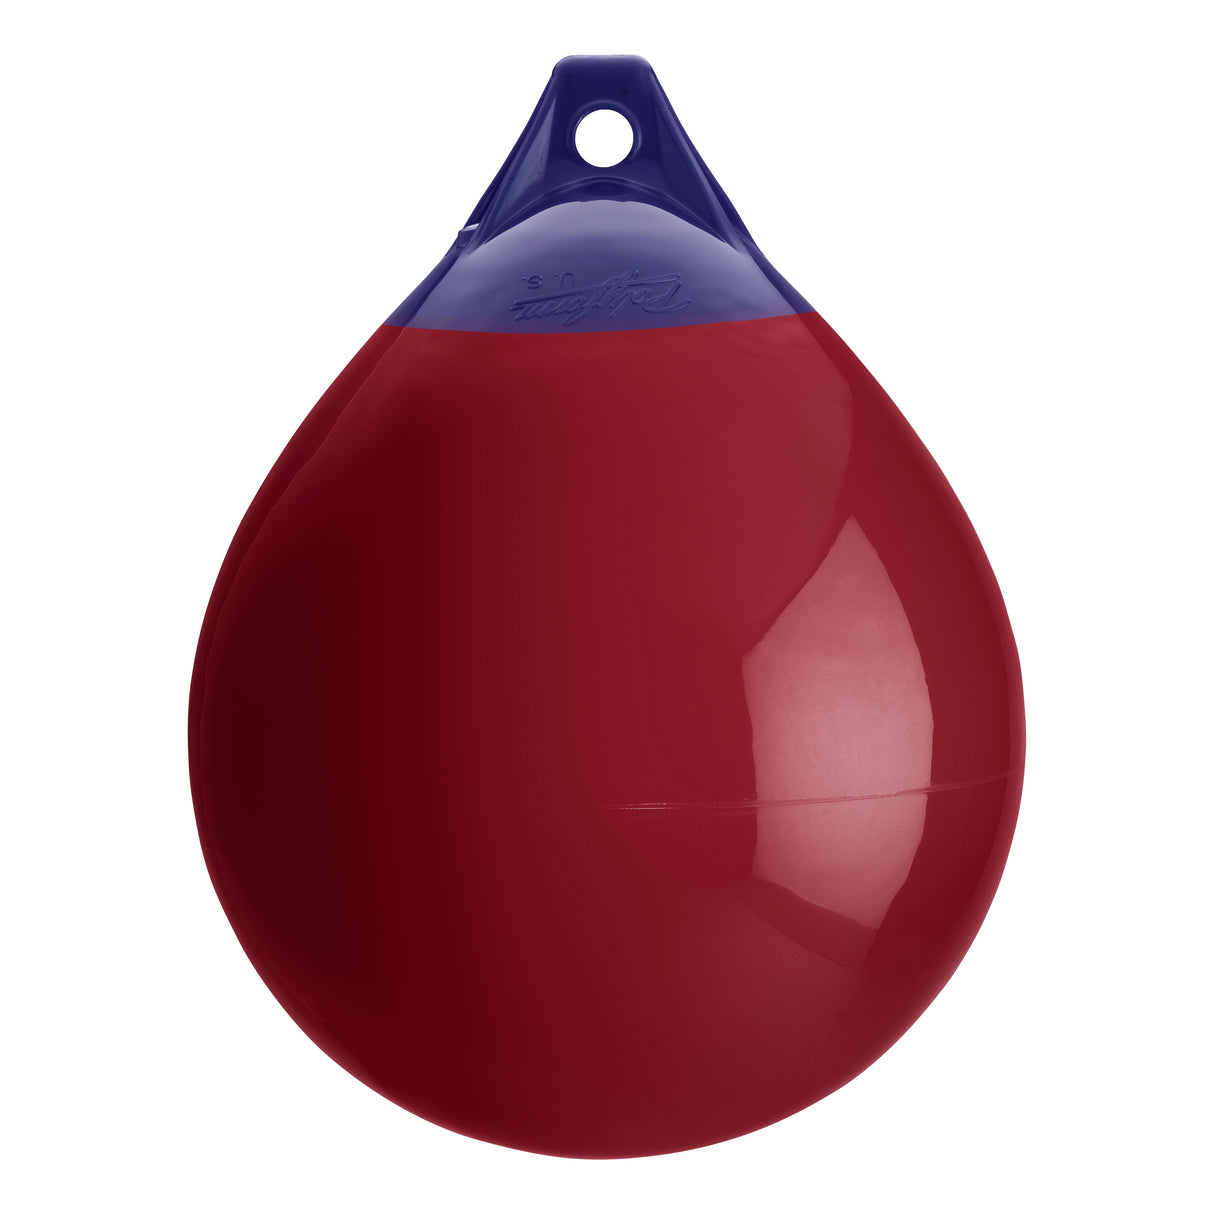 Burgundy inflatable buoy, Polyform A-3 